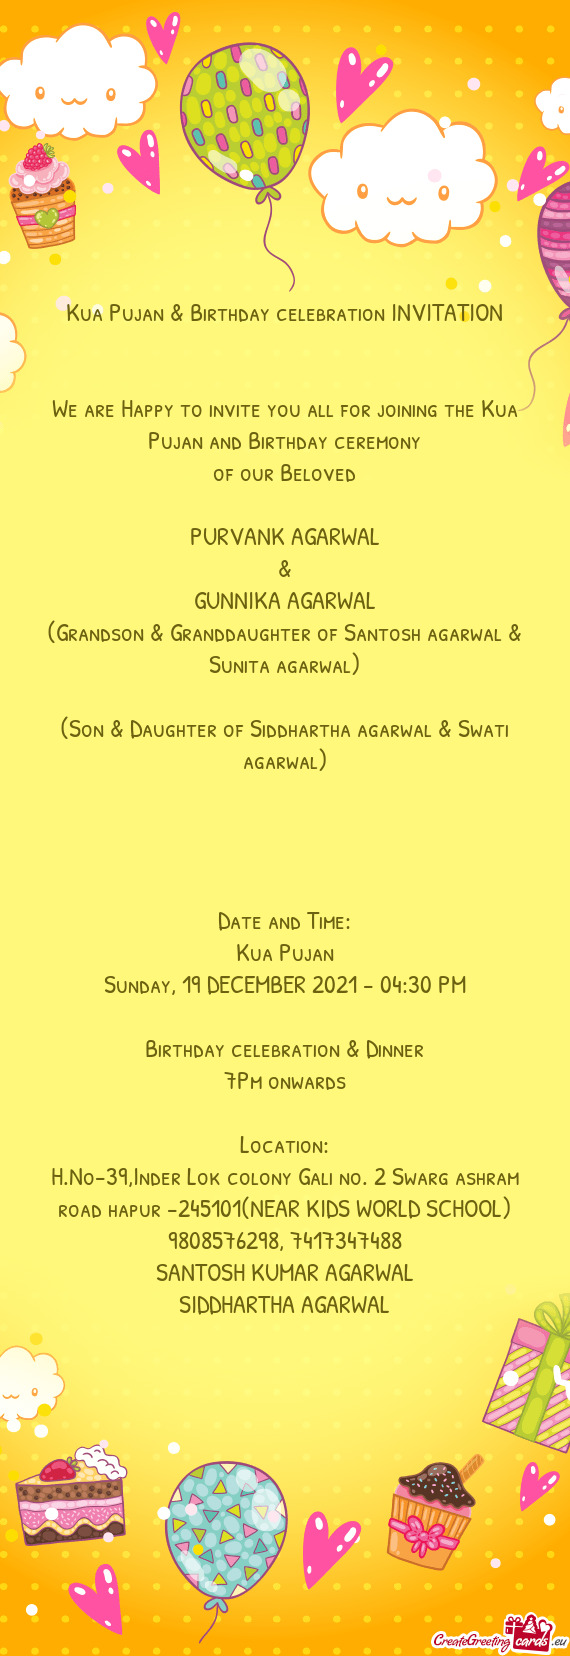 (Son & Daughter of Siddhartha agarwal & Swati agarwal)